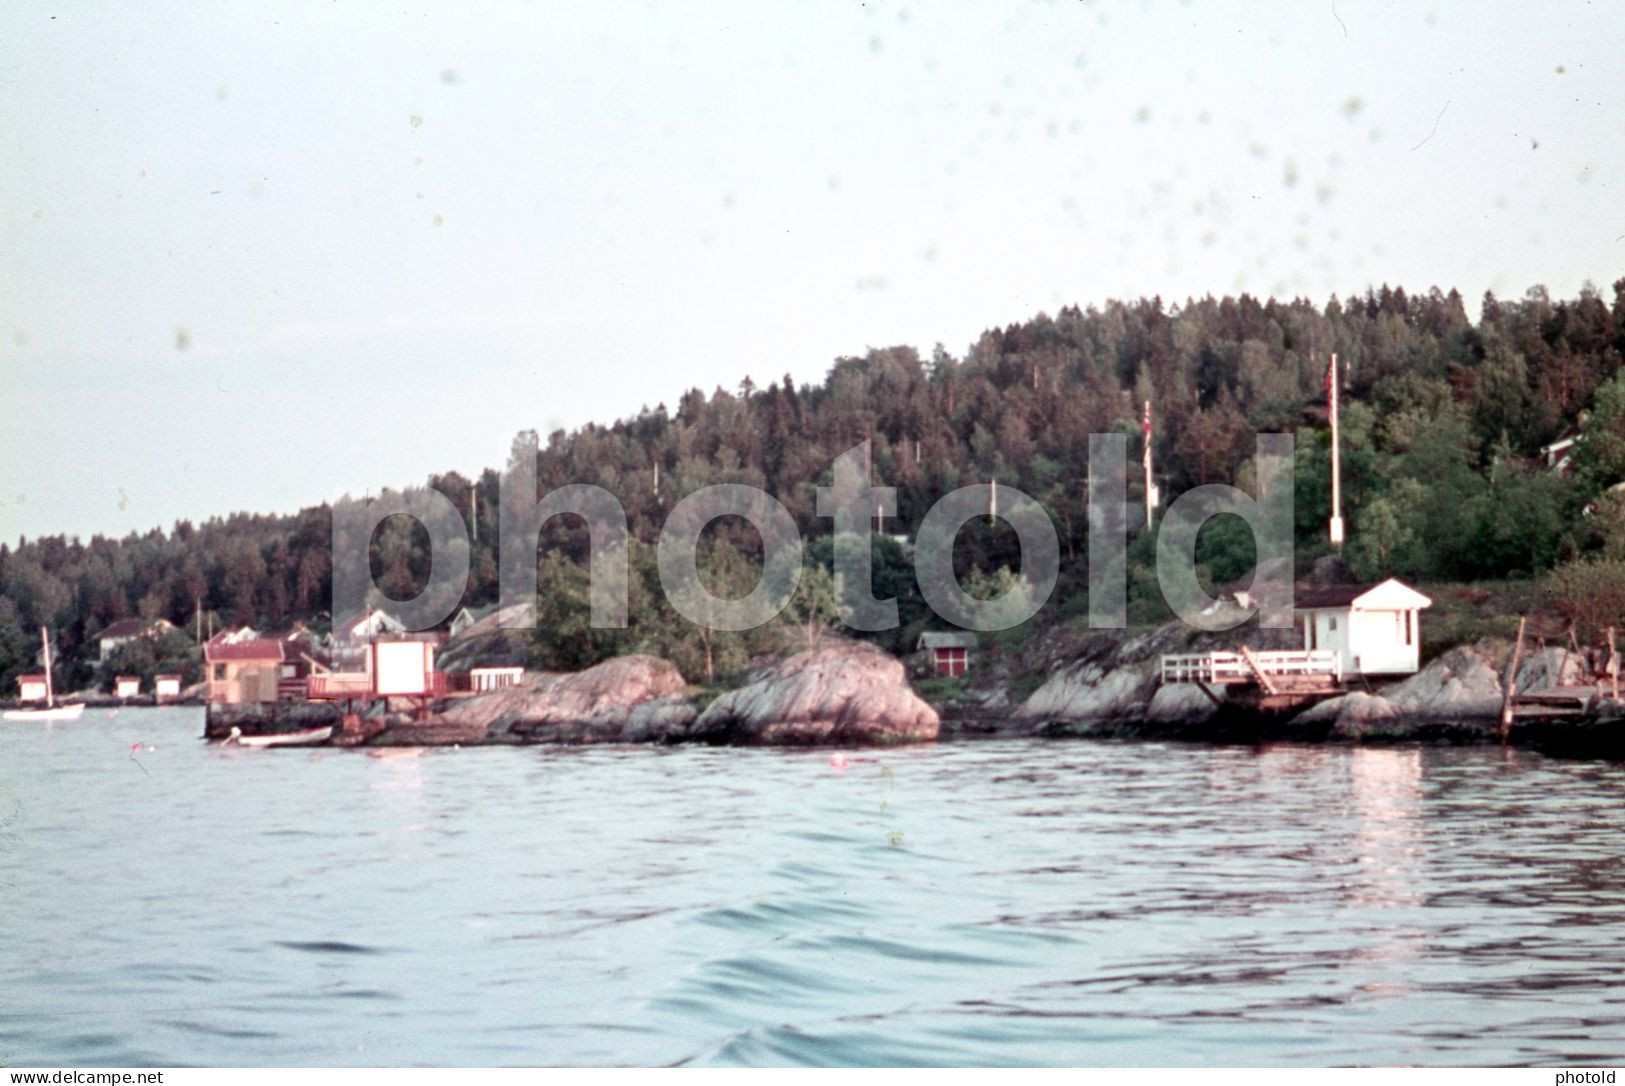 12 SLIDES SET 1977 OSLO NORWAY FJORDER NORGE AMATEUR 35mm SLIDE PHOTO 35mm DIAPOSITIVE SLIDE Not PHOTO No FOTO NB4105 - Dias